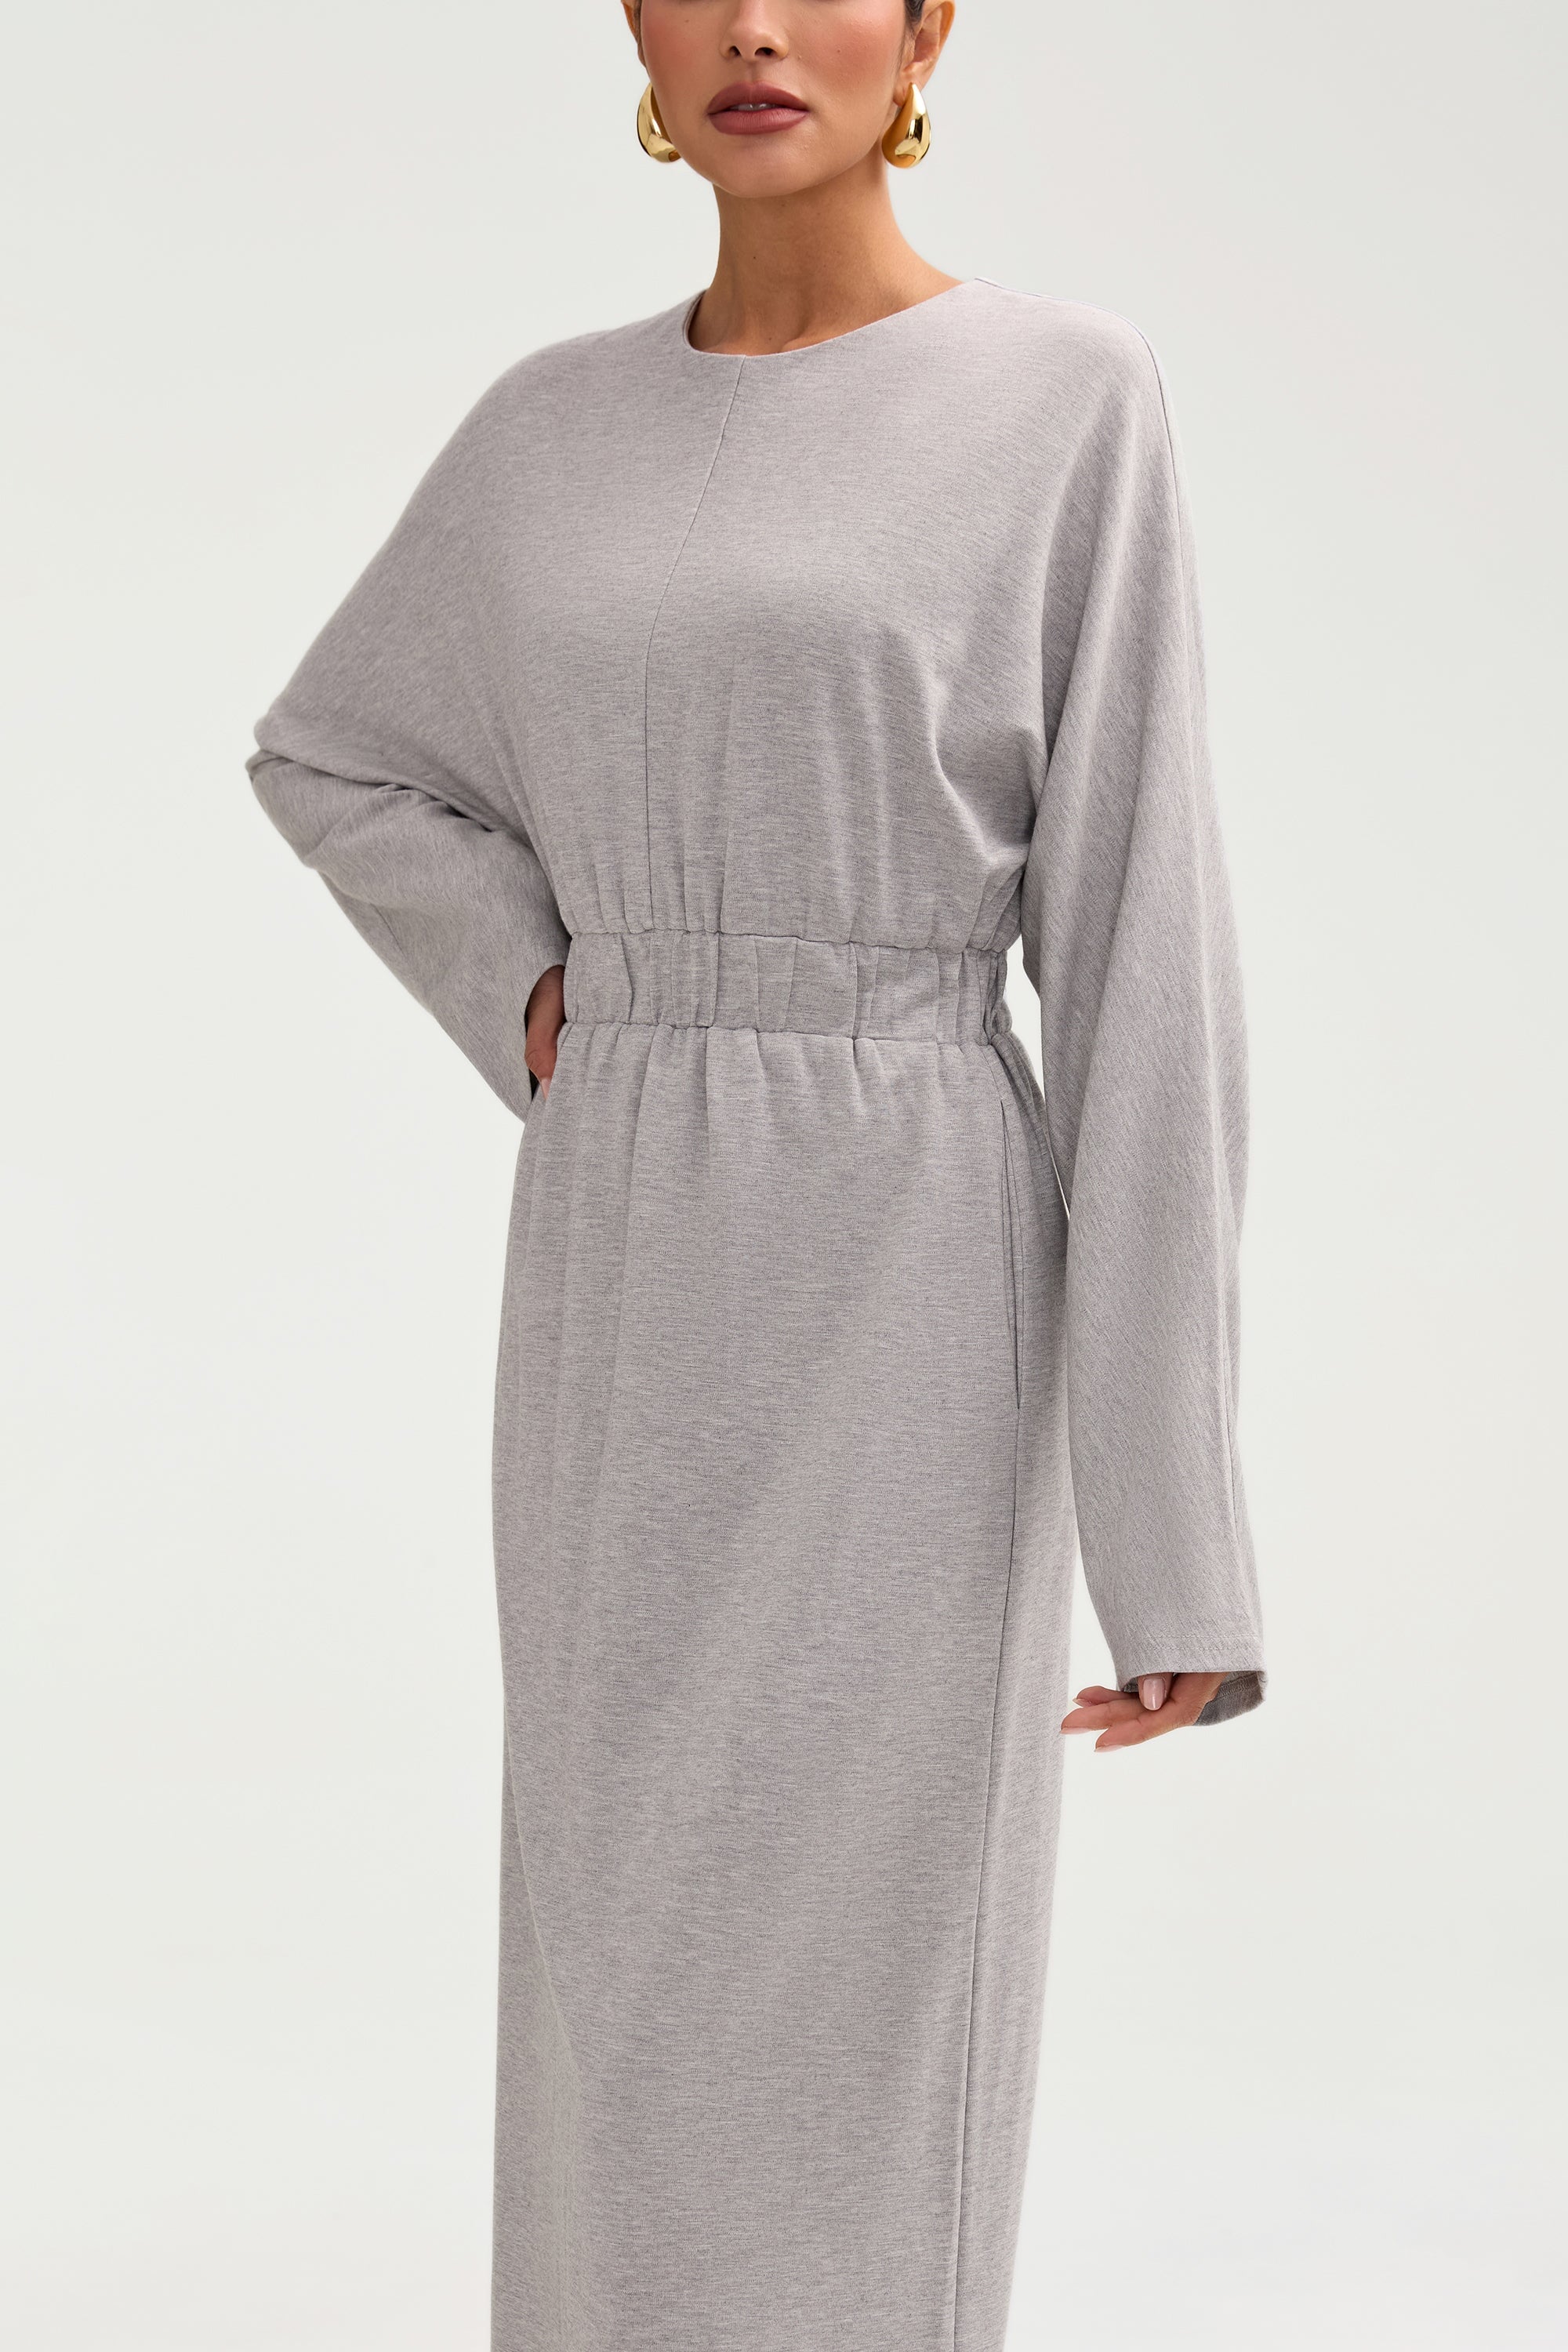 Adelynn Jersey Batwing Maxi Dress - Heather Grey Clothing Veiled 